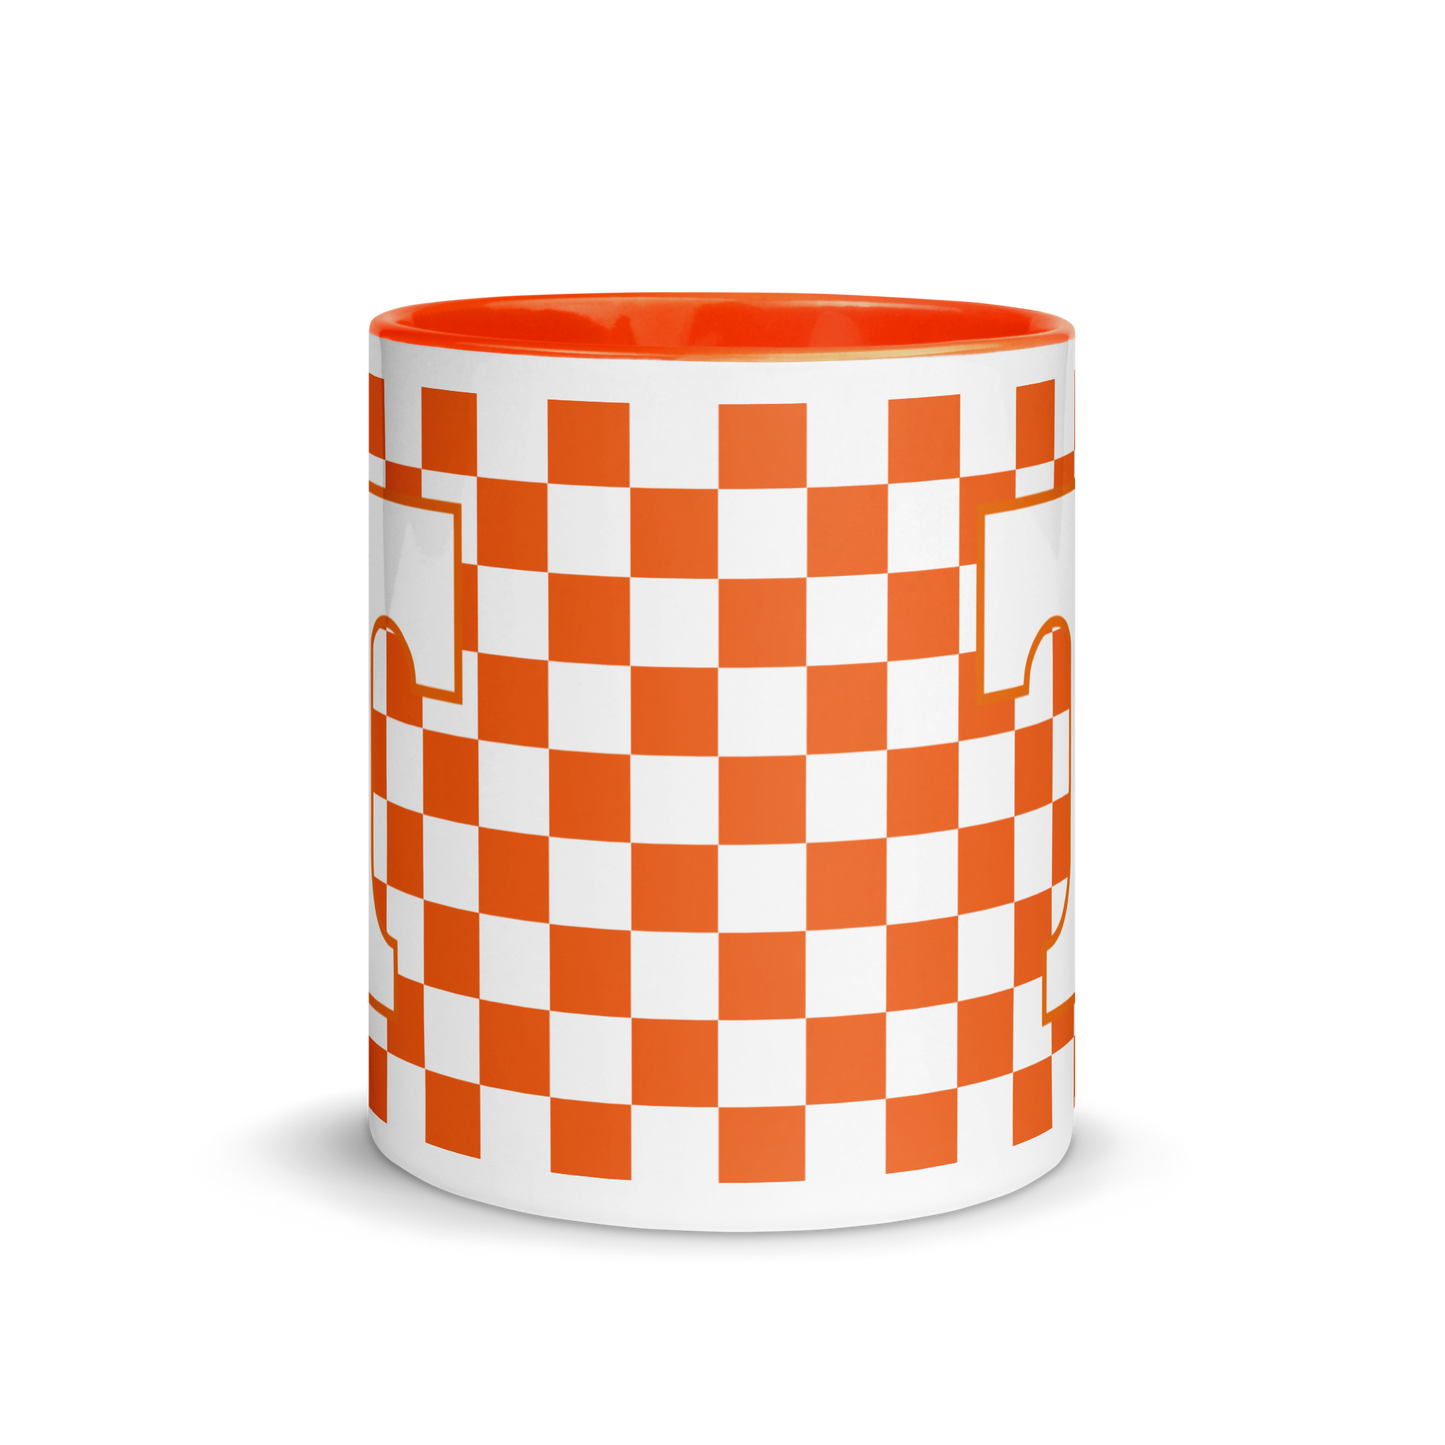 TN Checkered Mug with Color Inside